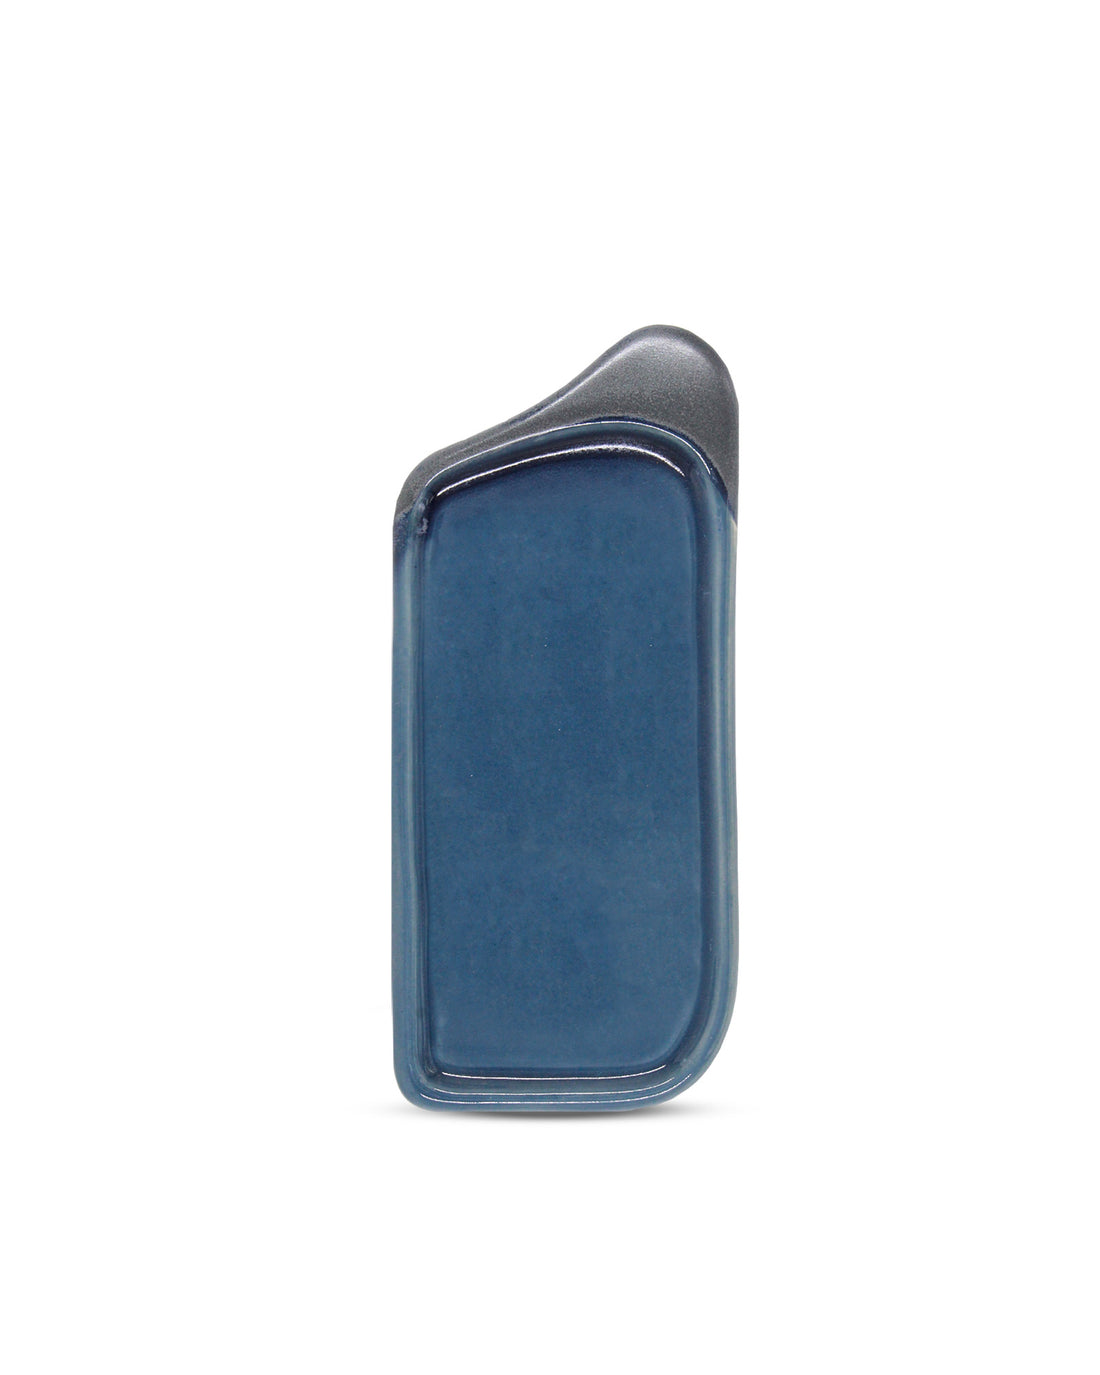 AEGEAN BLUE / Large || Elemental Shades Platters - Set of 3